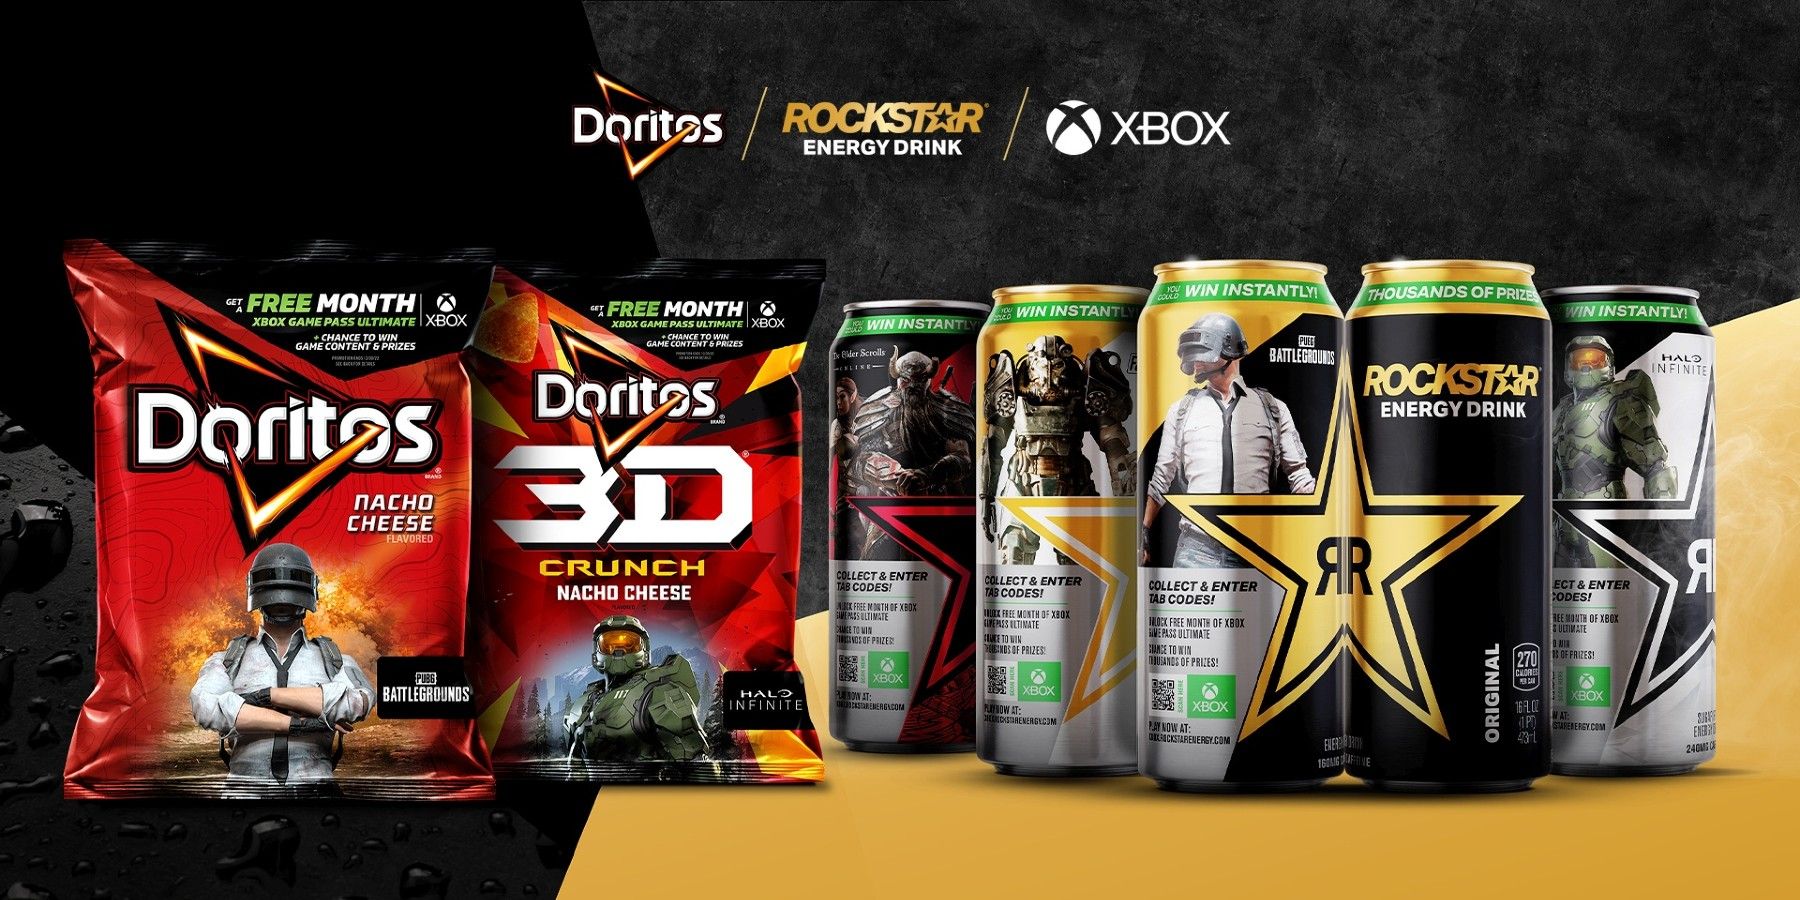 xbox doritos rockstar energy drink promotion